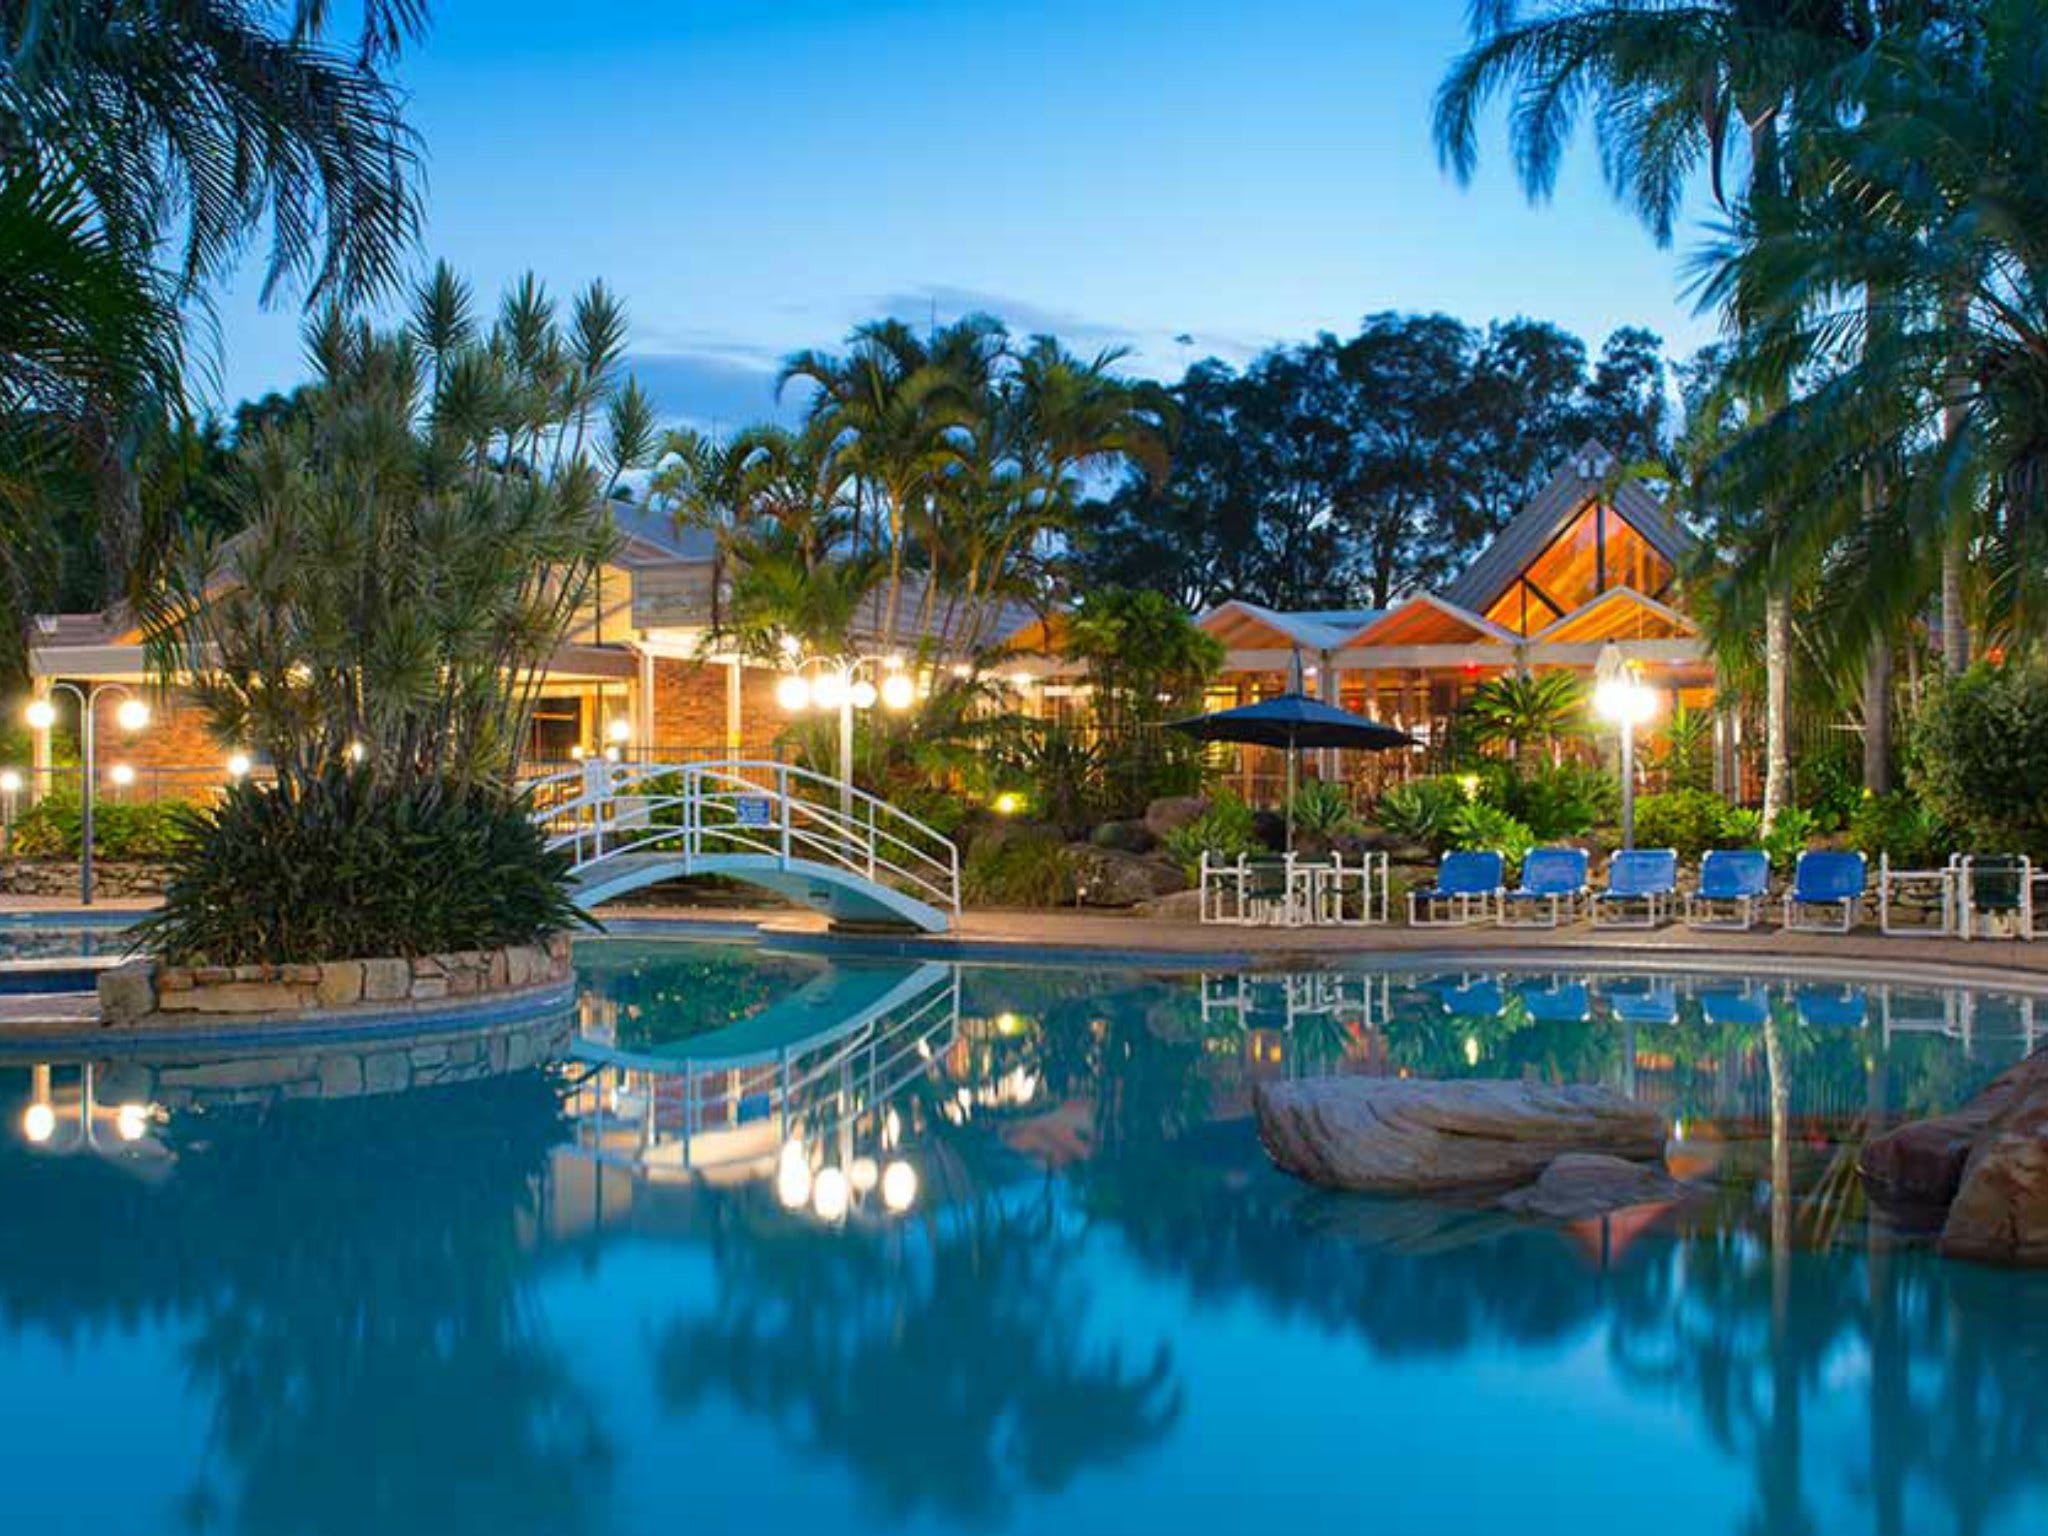 Boambee Bay Resort - Accommodation Sunshine Coast